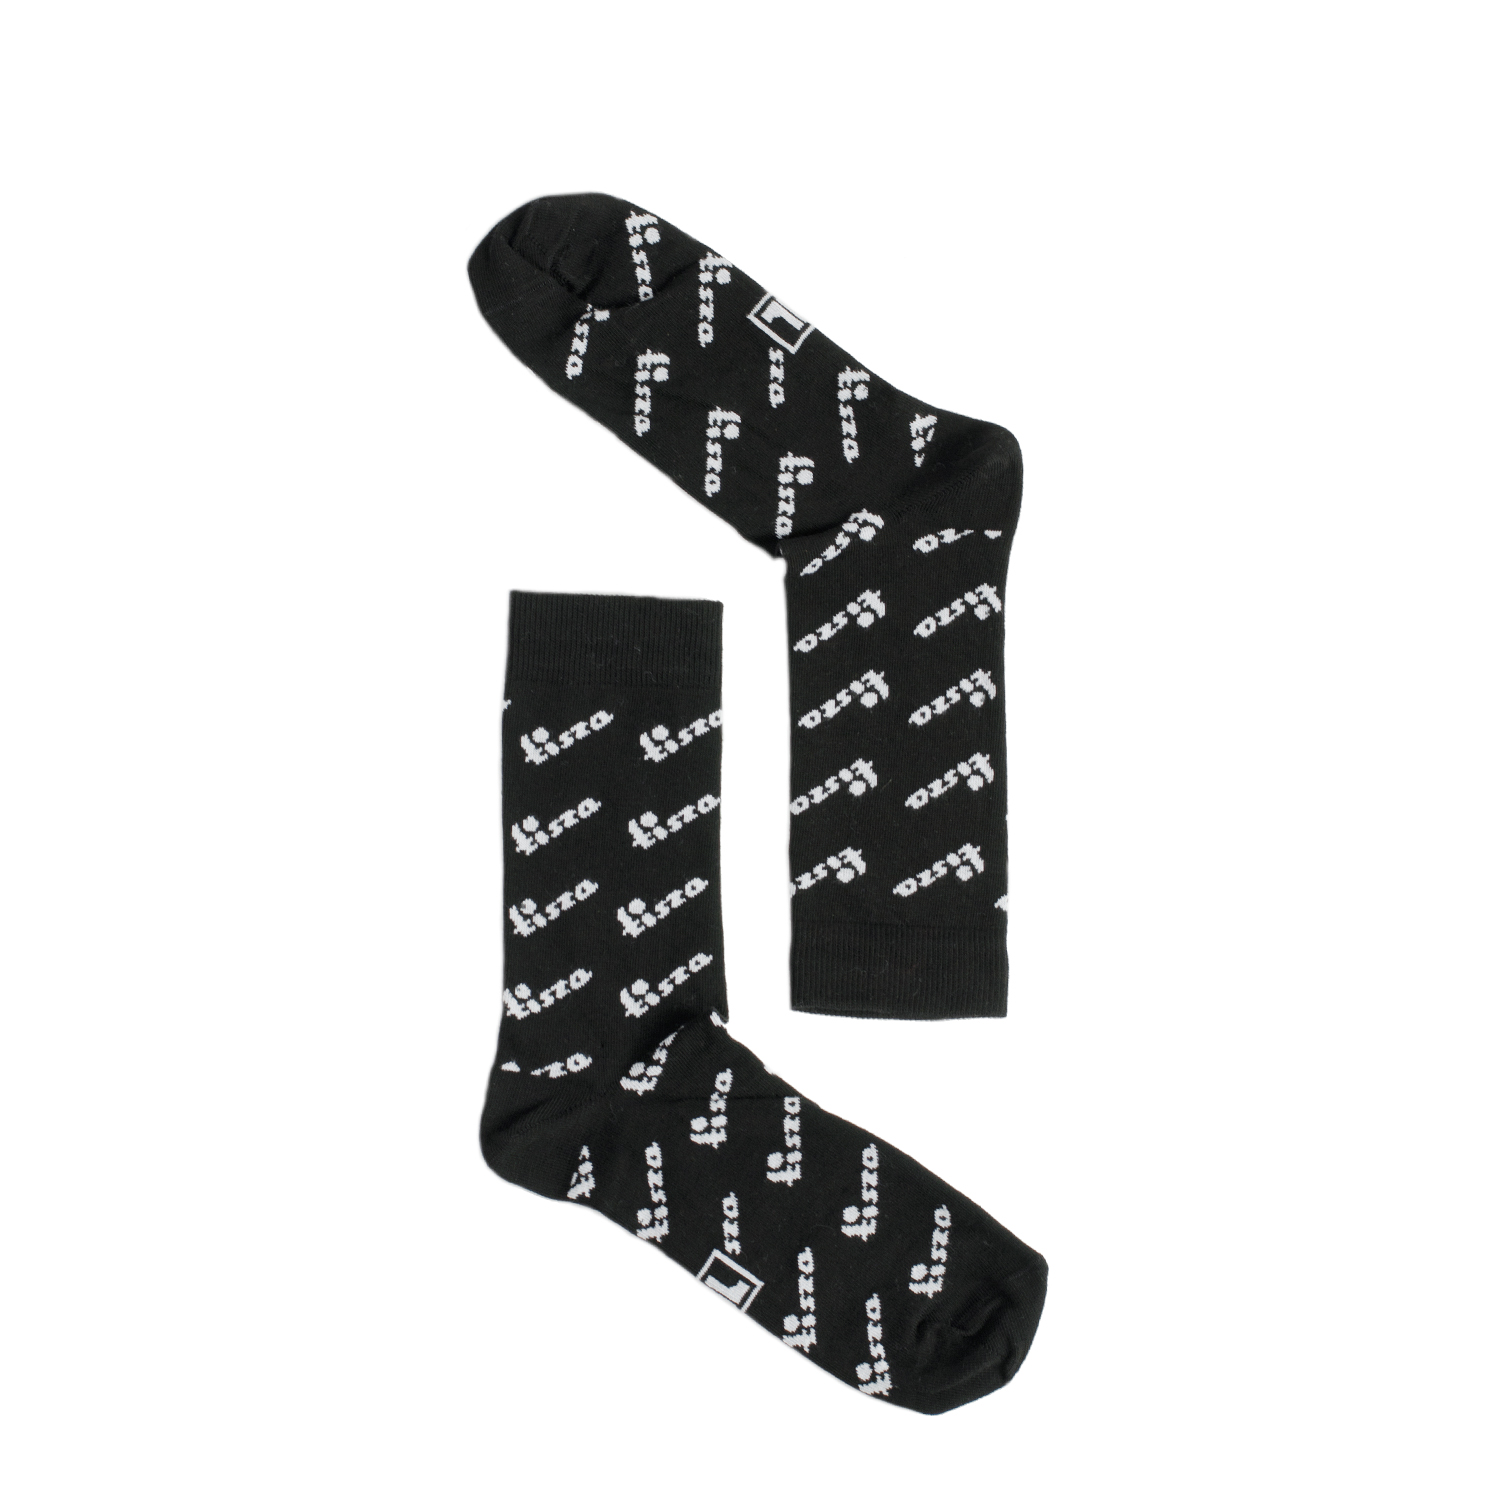 Tisza Shoes - Socks - Black-white t-logo